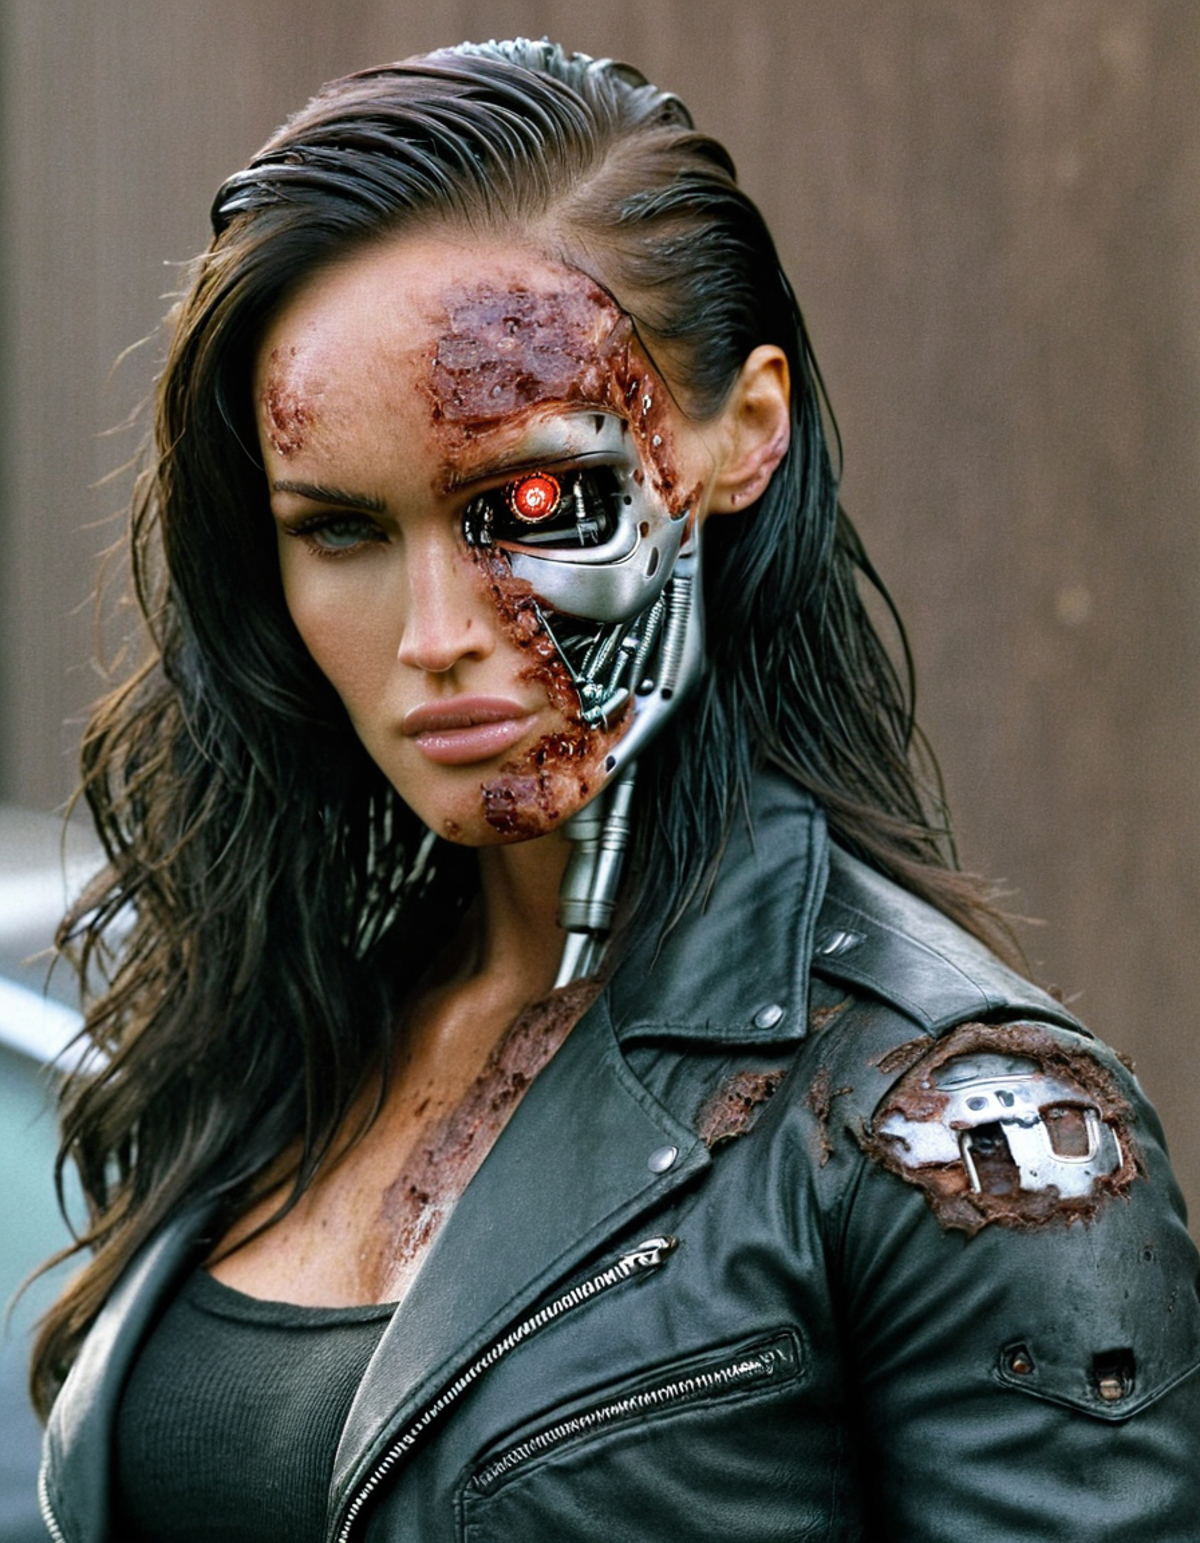 Damaged Terminator XL image by Makethemcomealive